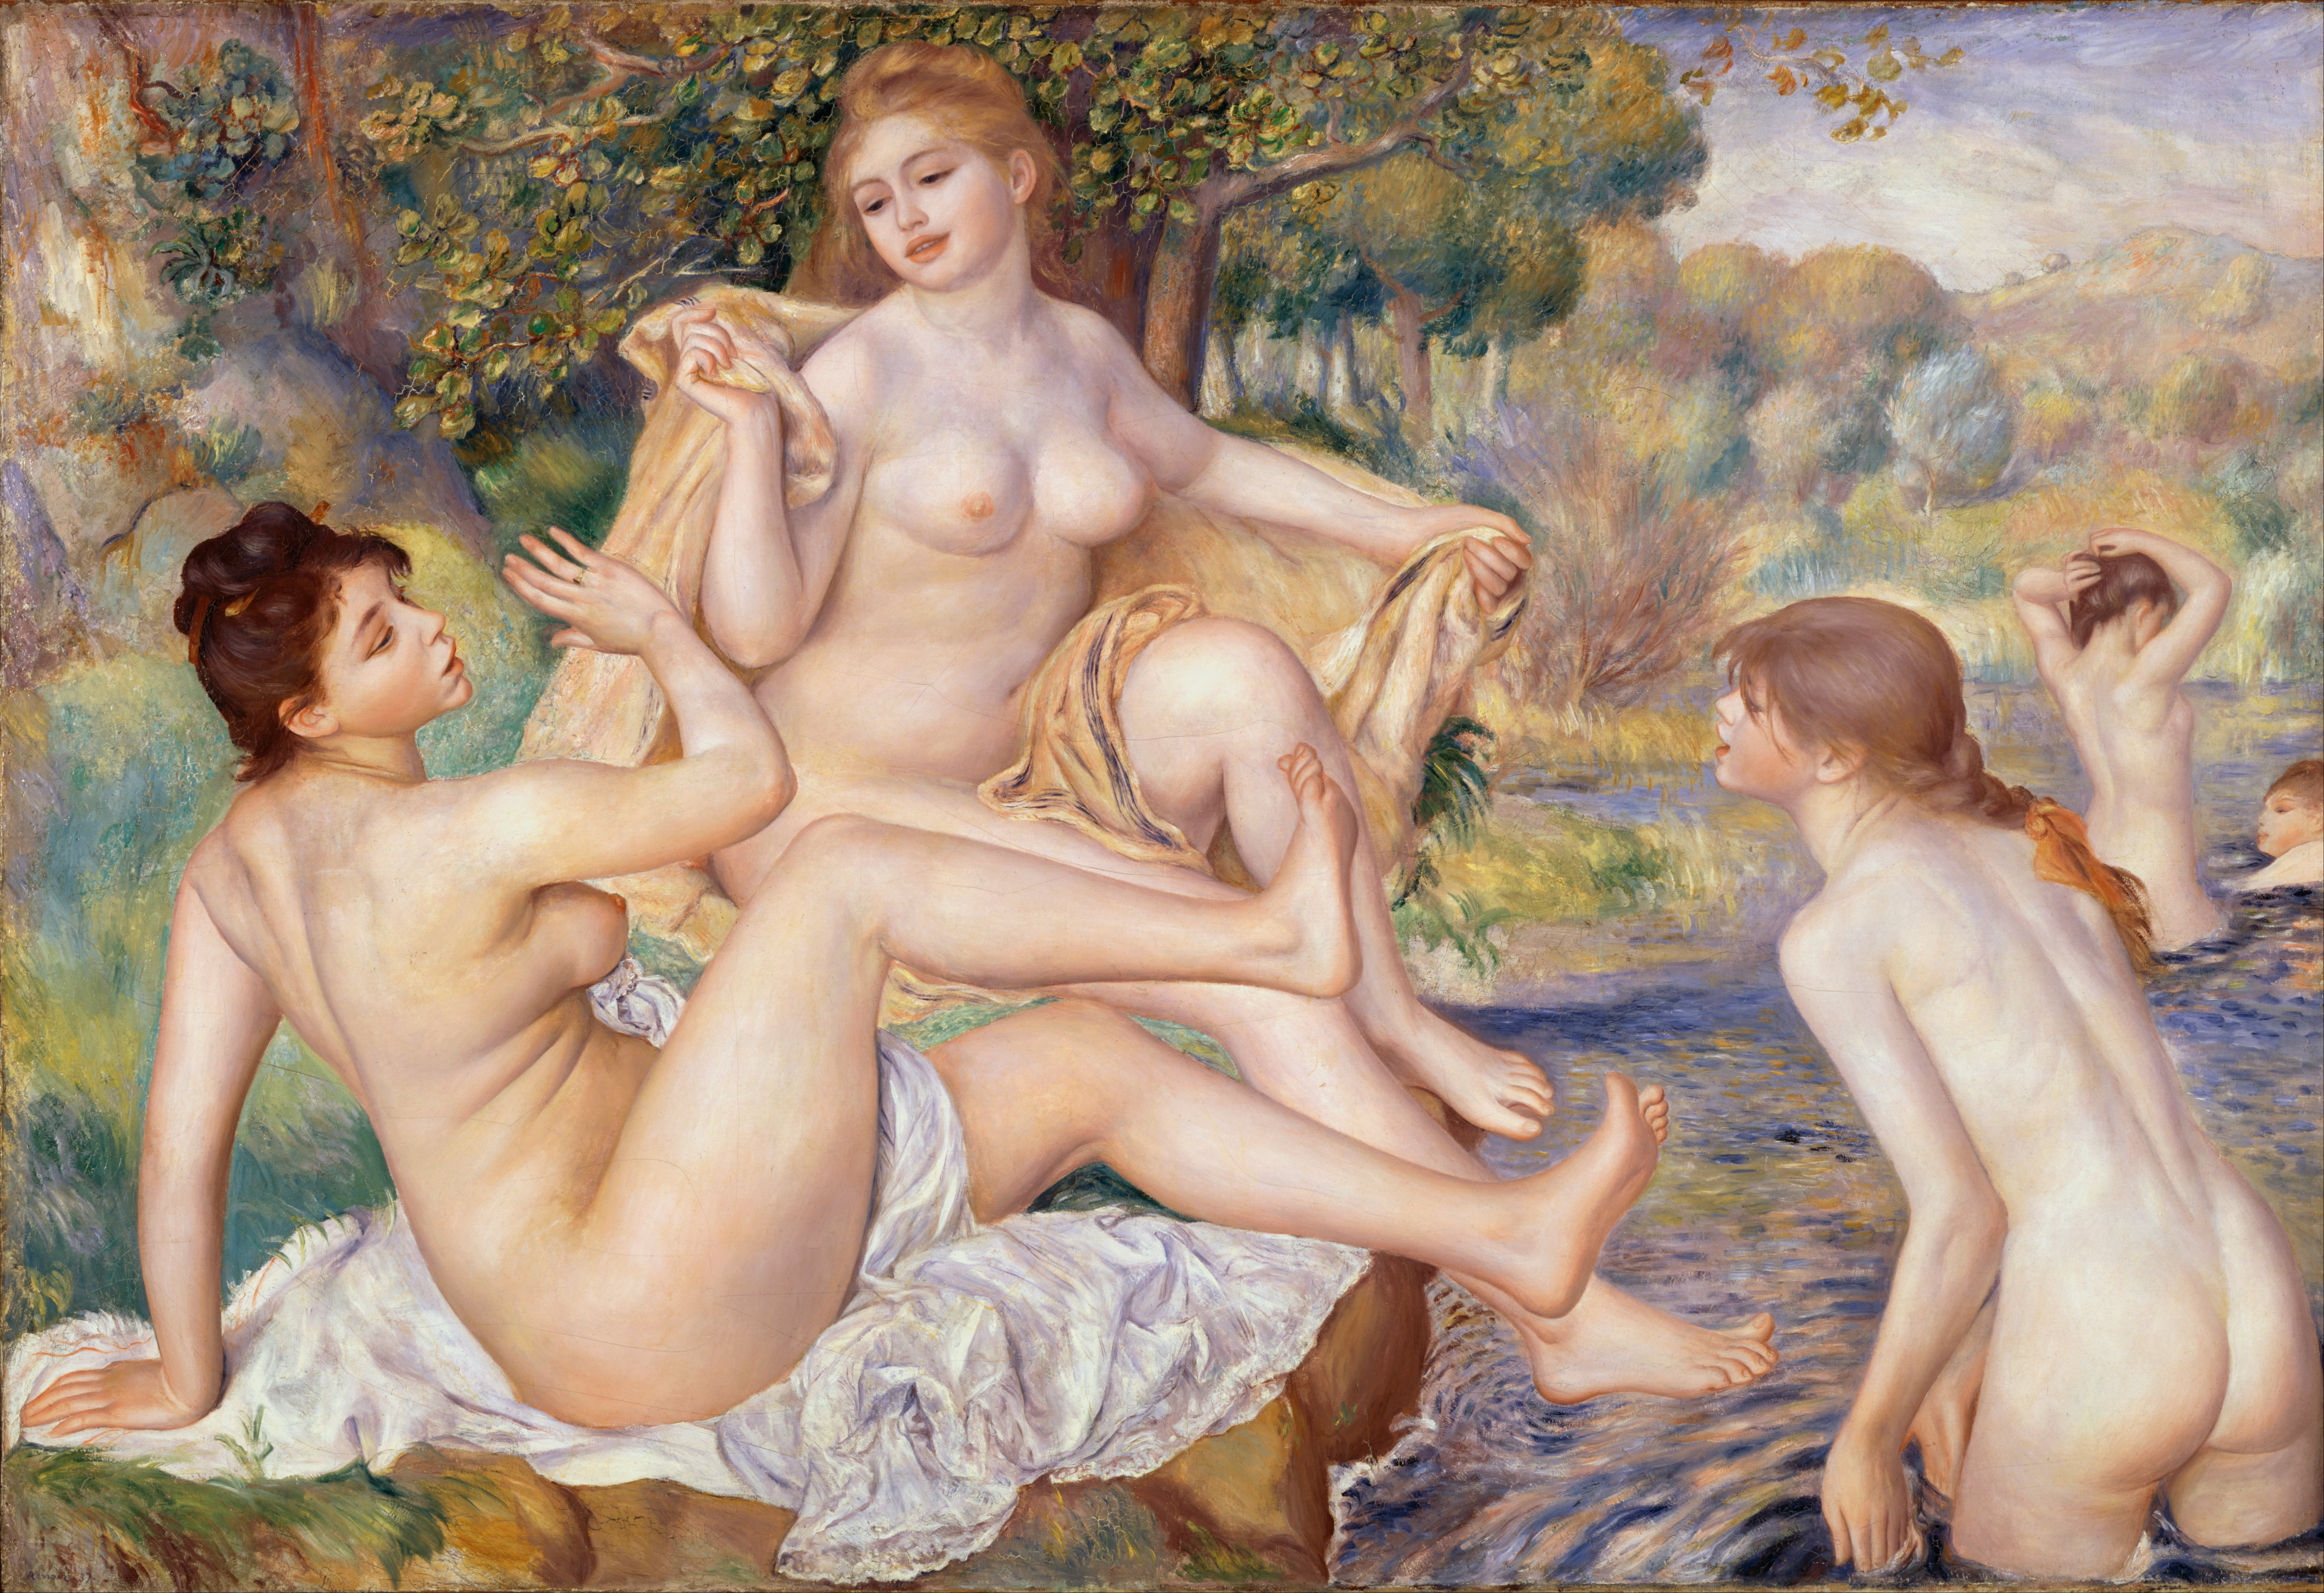 Auguste Renoir, The Large Bathers, 1887, Philadelphia Museum of Art, Philadelphia, PA, USA.